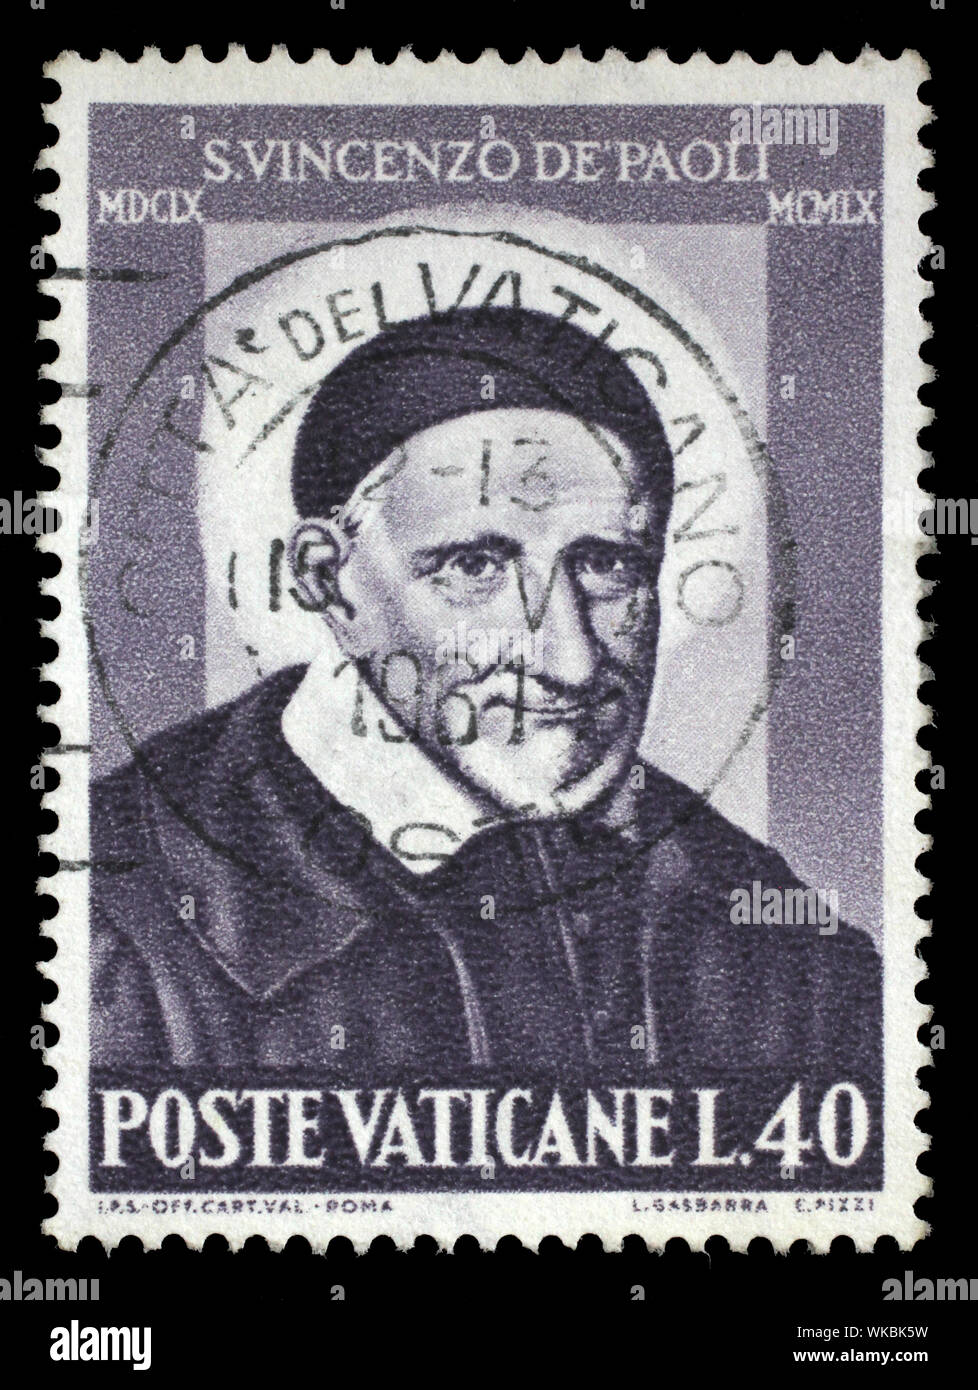 Stempel im Vatikan ausgestellt zeigt Saint Vincent de Paul, 3 100-Jahrfeier der Geburt, um 1960. Stockfoto